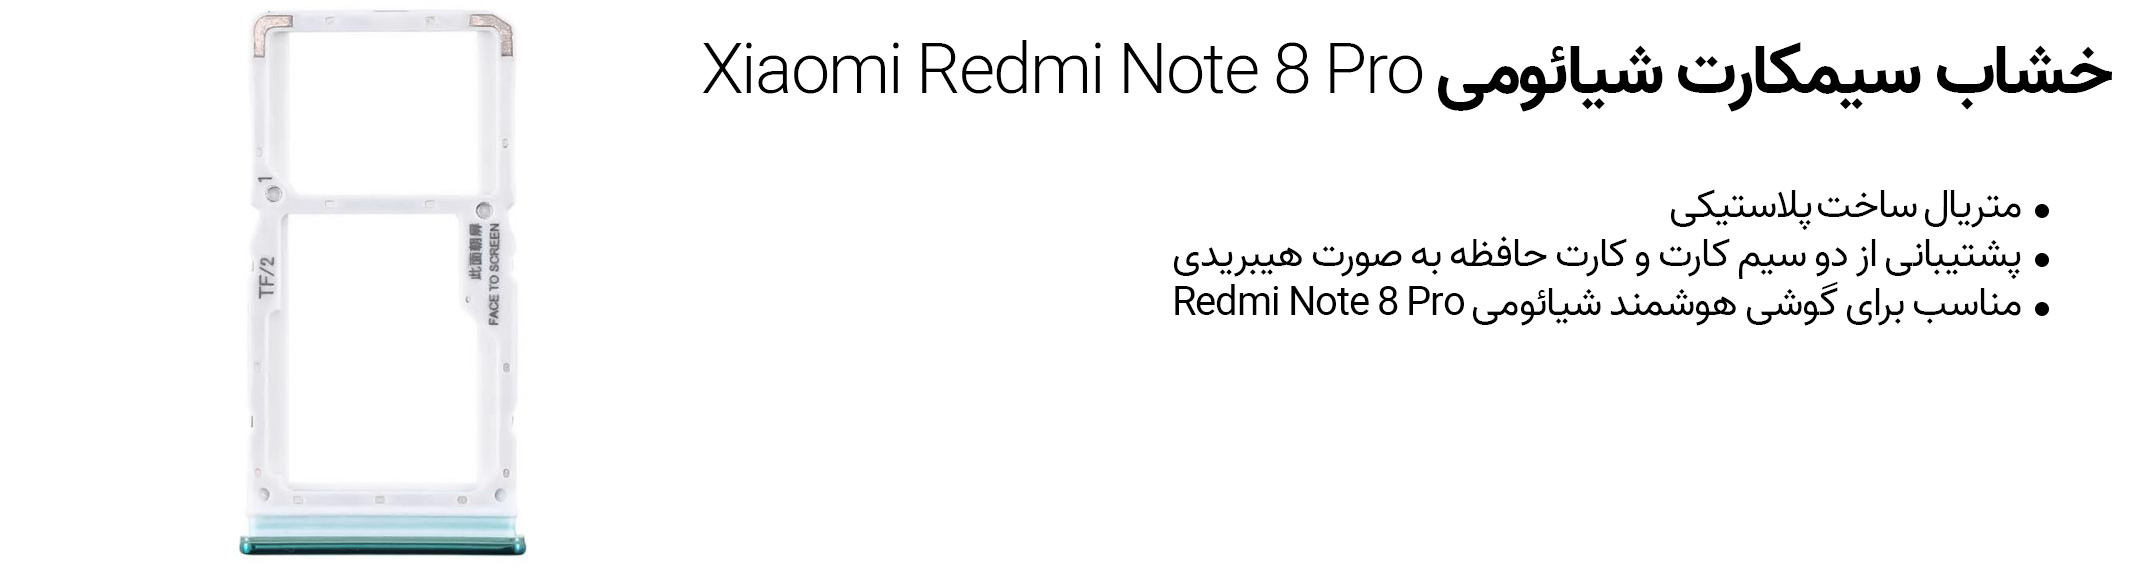 خشاب سیمکارت شیائومی Xiaomi Redmi Note 8 Pro